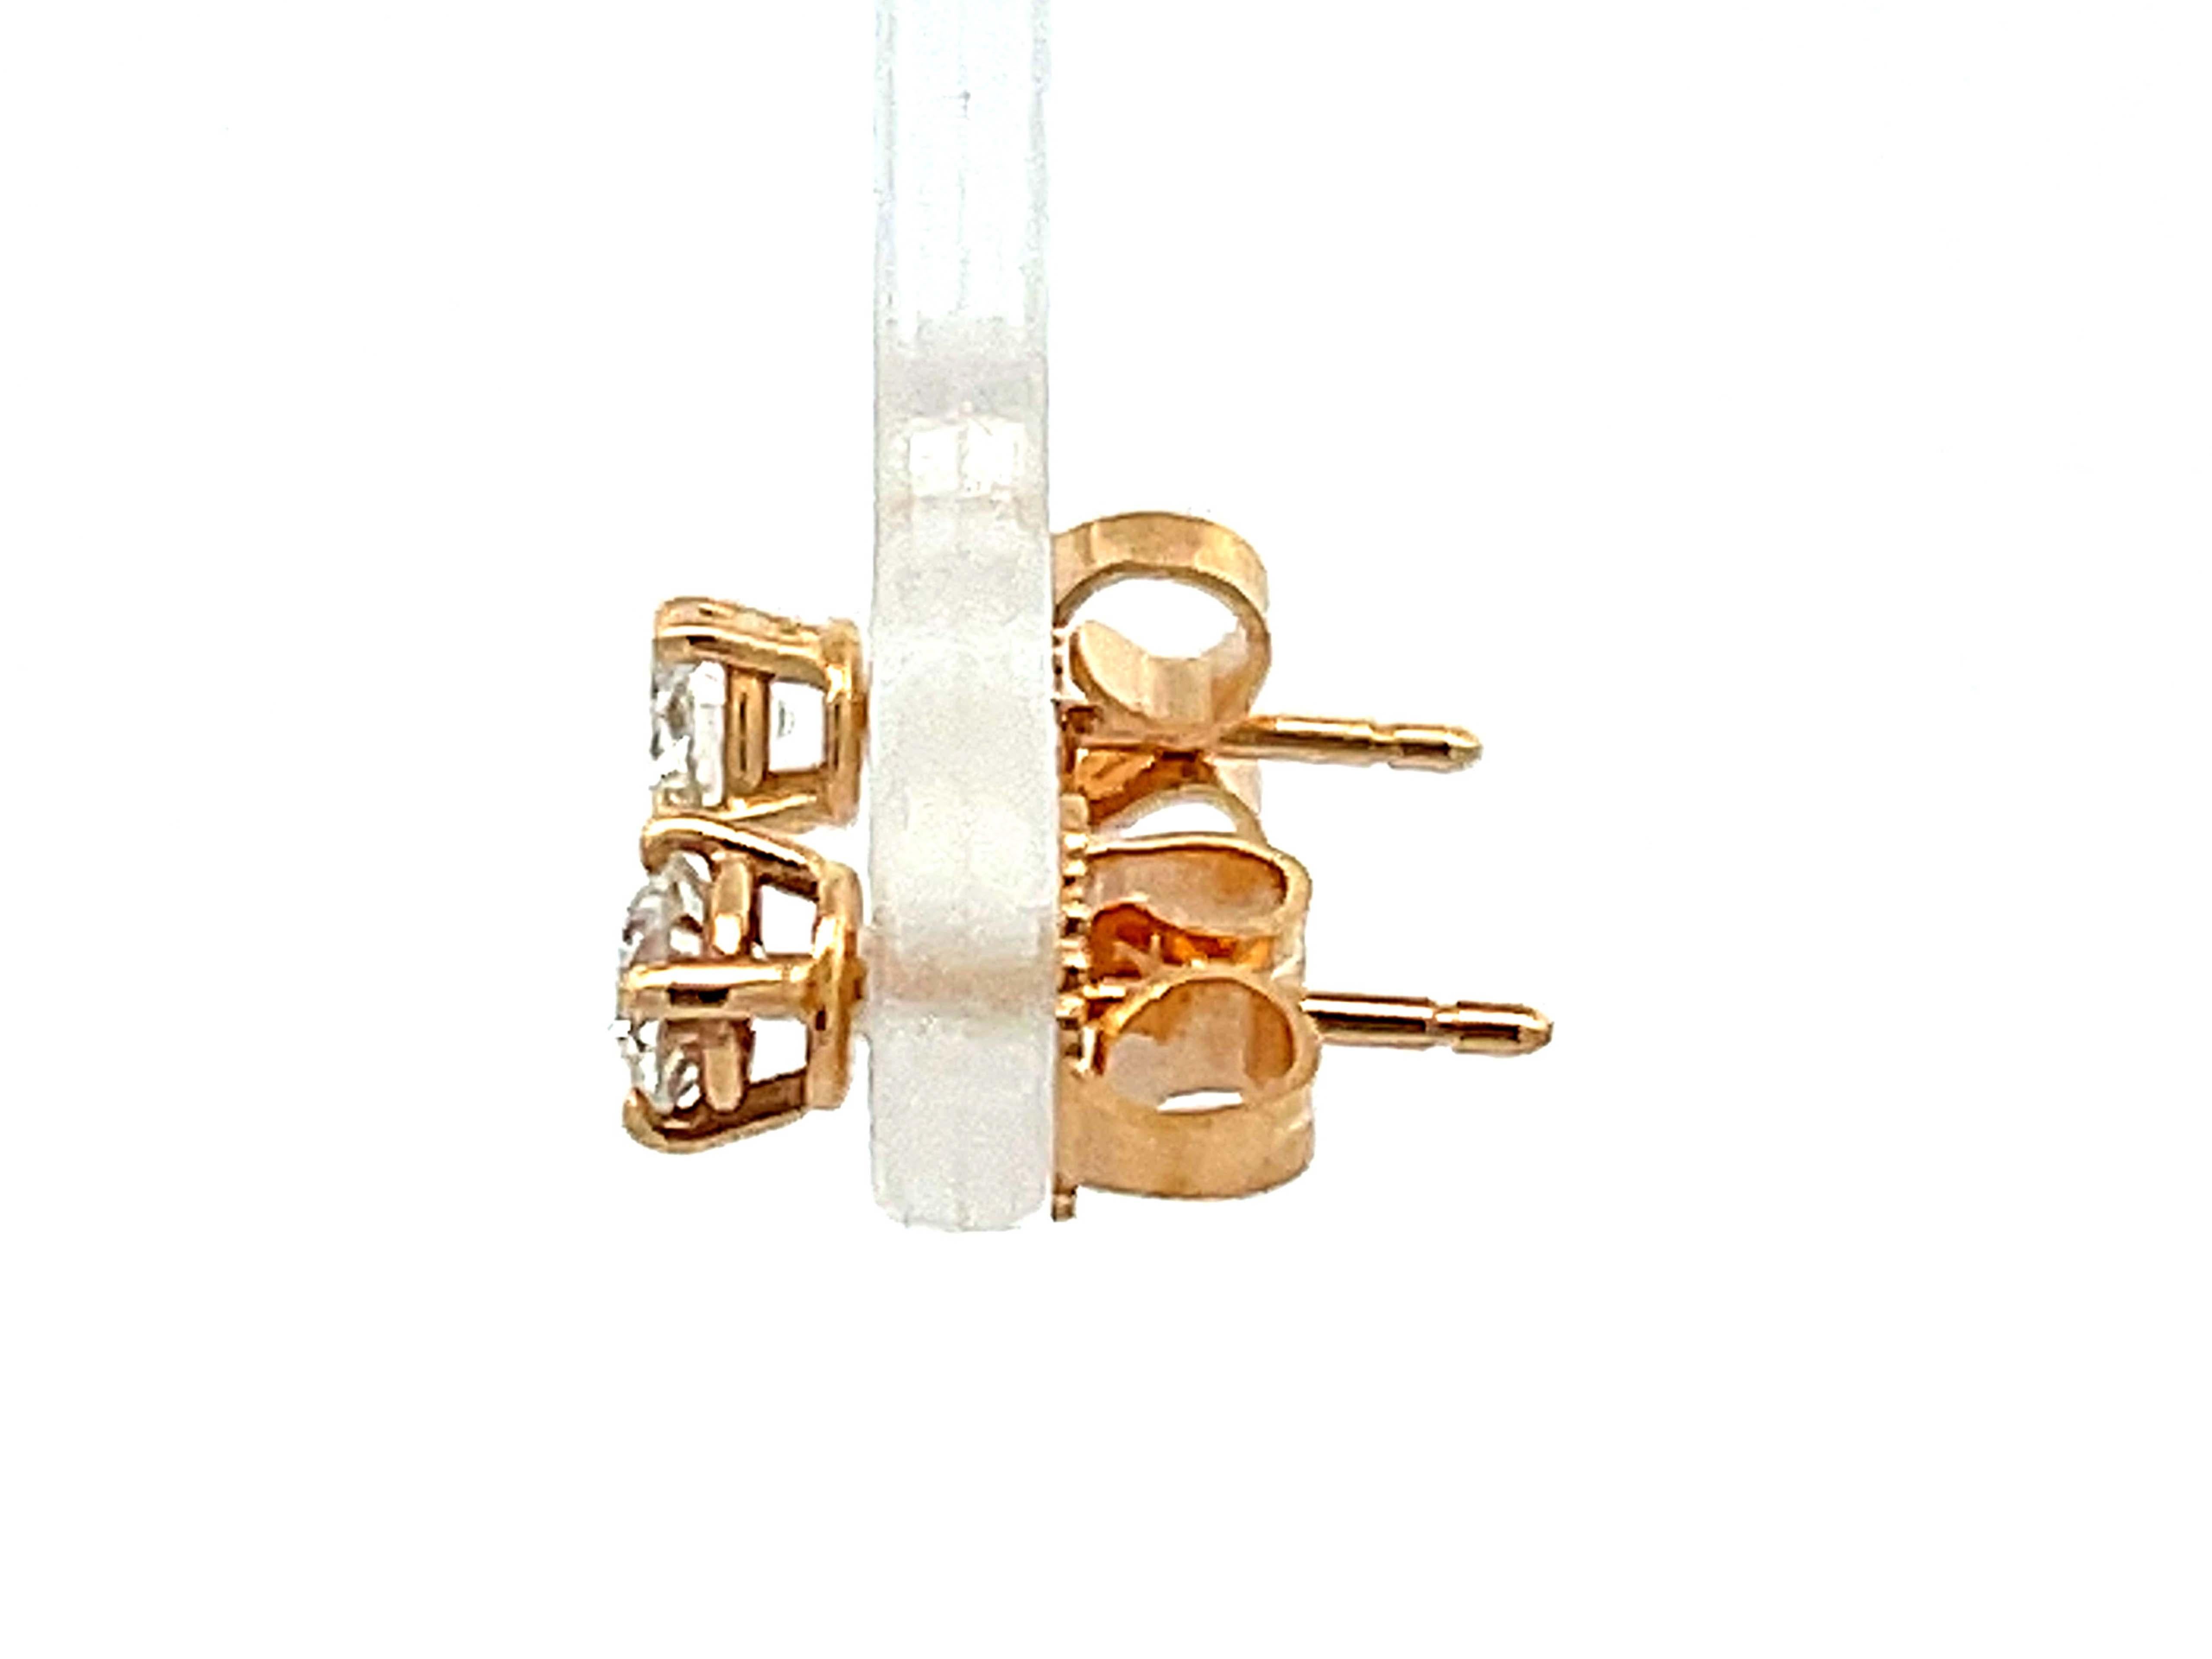 Modern Tiffany Solitaire Diamond Stud Earrings in 18k Yellow Gold 0.34 Carat